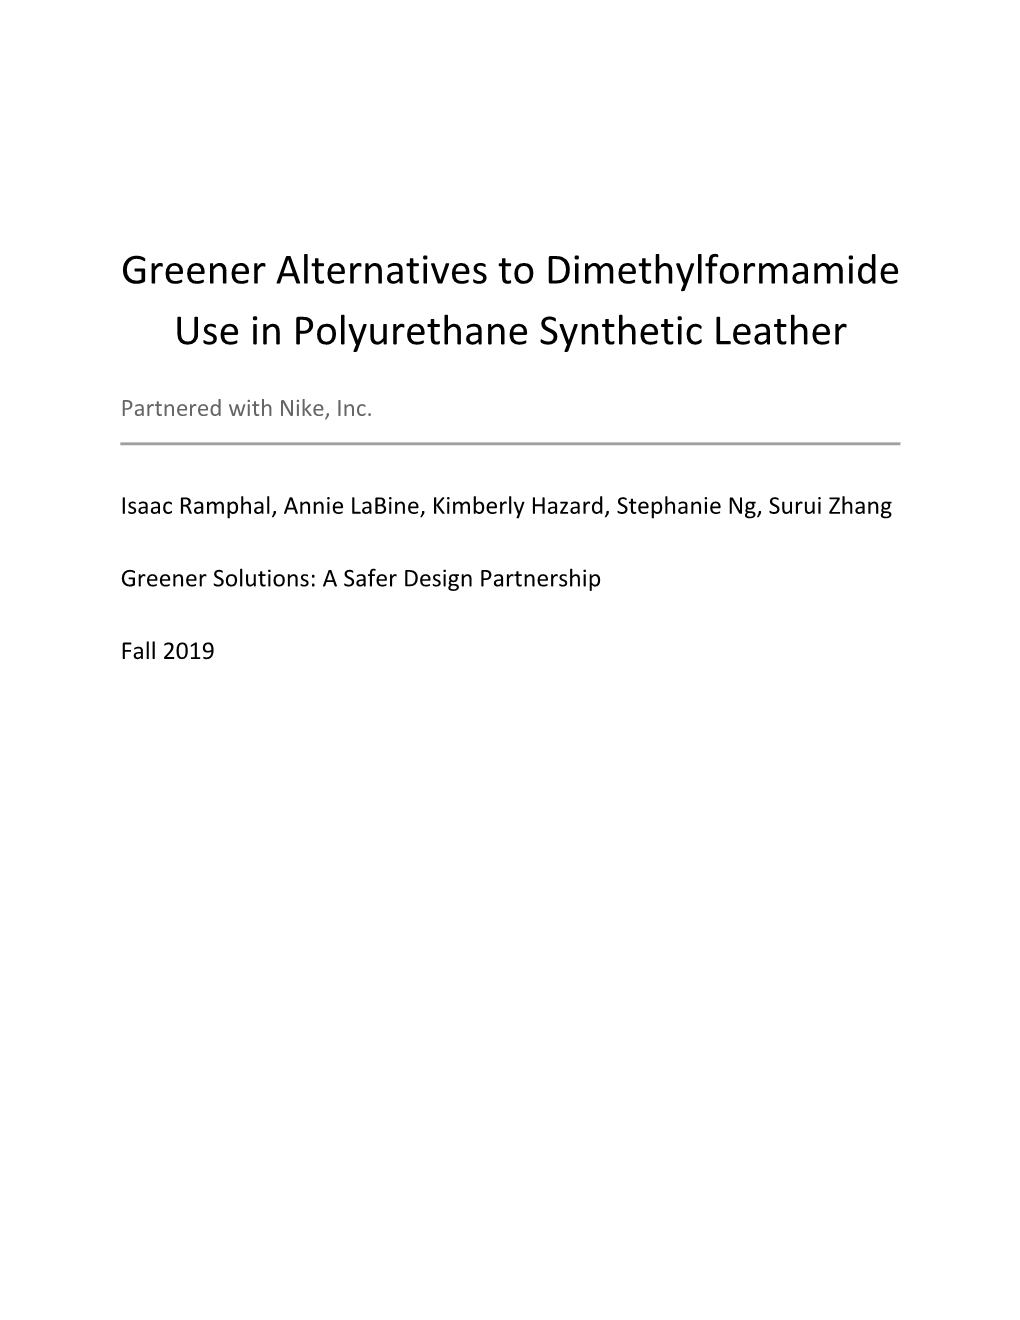 Greener Alternatives to Dimethylformamide Use in Polyurethane Synthetic Leather